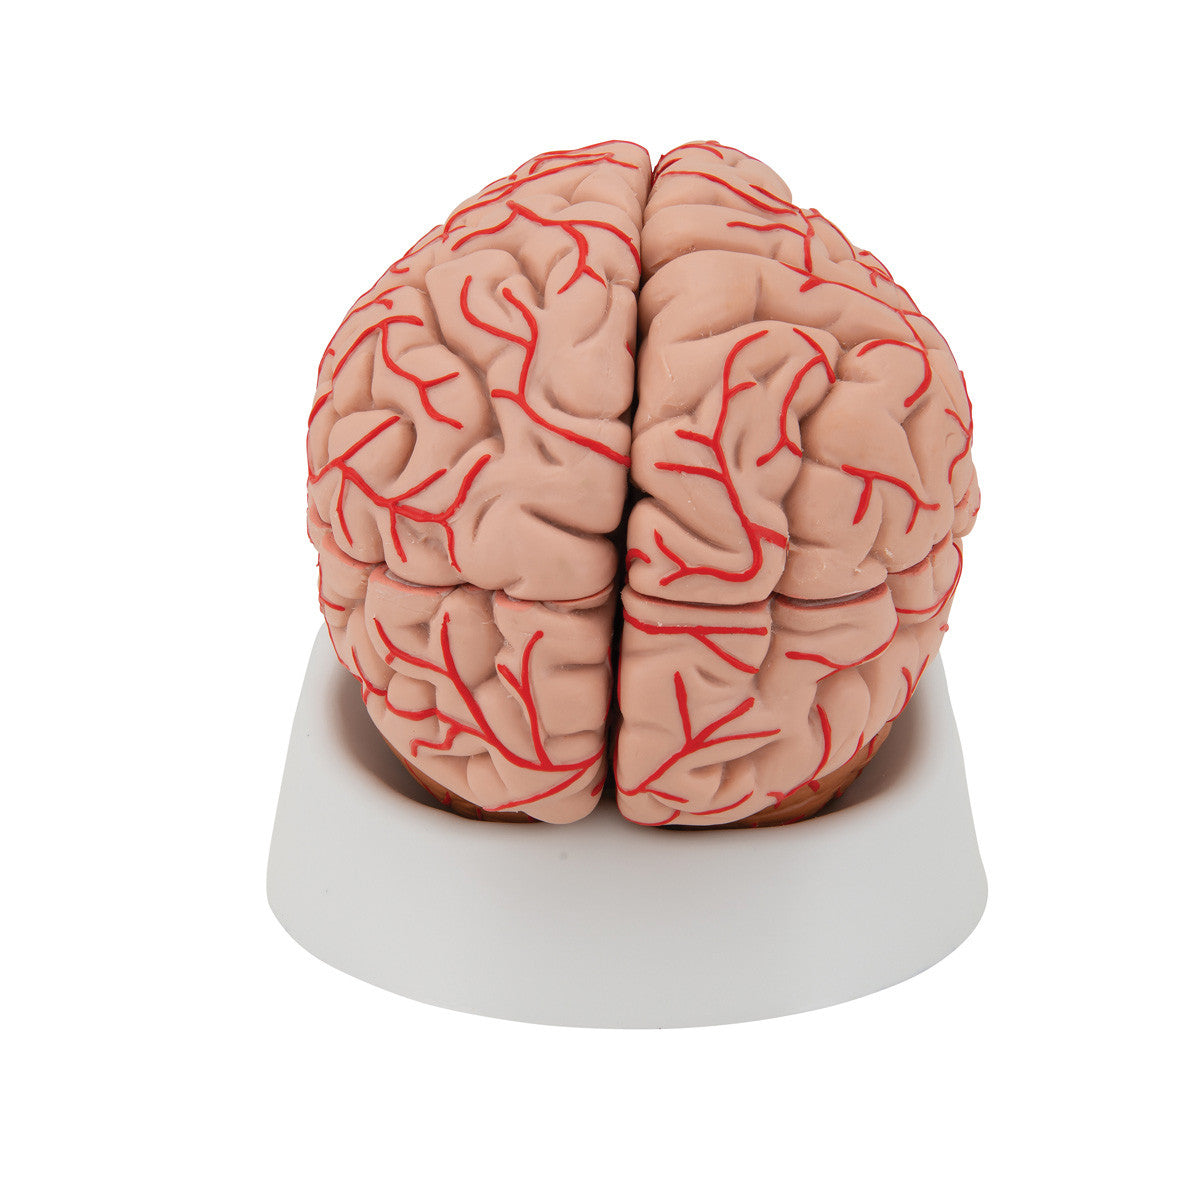 c20_04_1200_1200_human-brain-model-with-arteries-9-part-3b-smart-anatomy__27380.1589753158.1280.1280.jpg